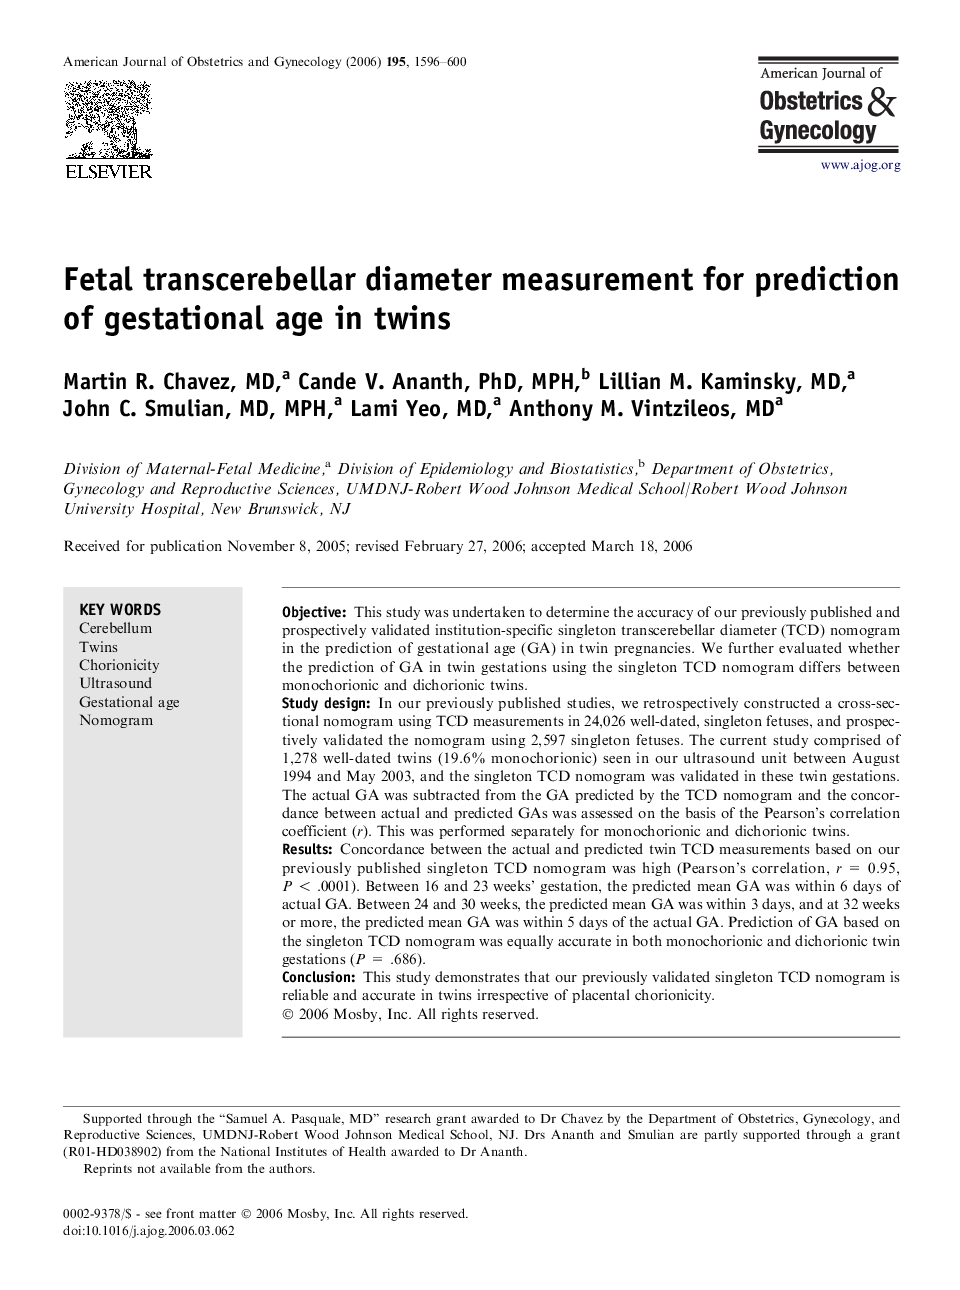 Fetal transcerebellar diameter measurement for prediction of gestational age in twins 